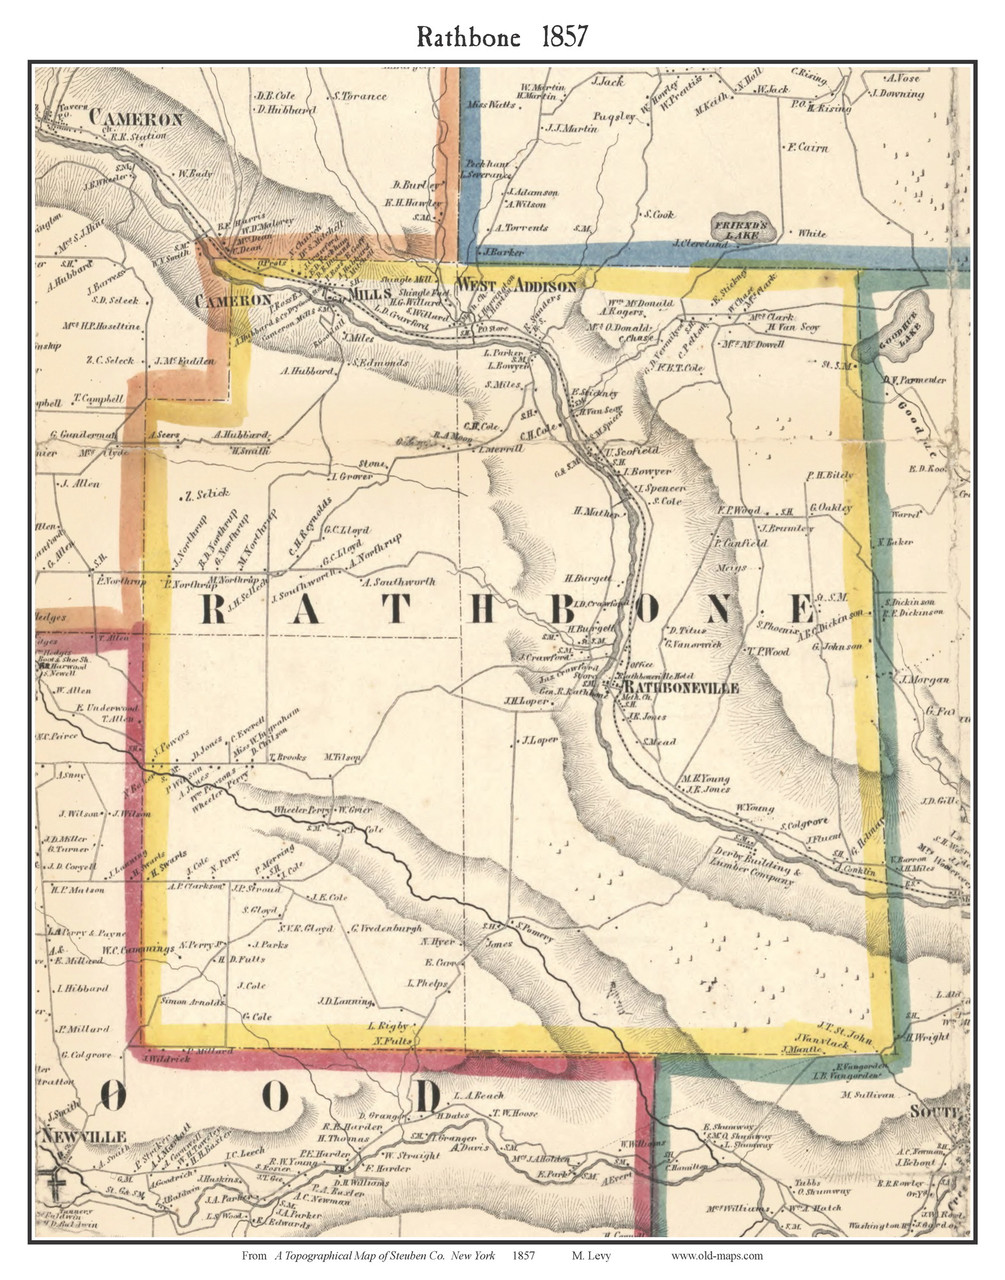 Rathbone New York 1857 Old Town Map Custom Print Steuben Co Old Maps